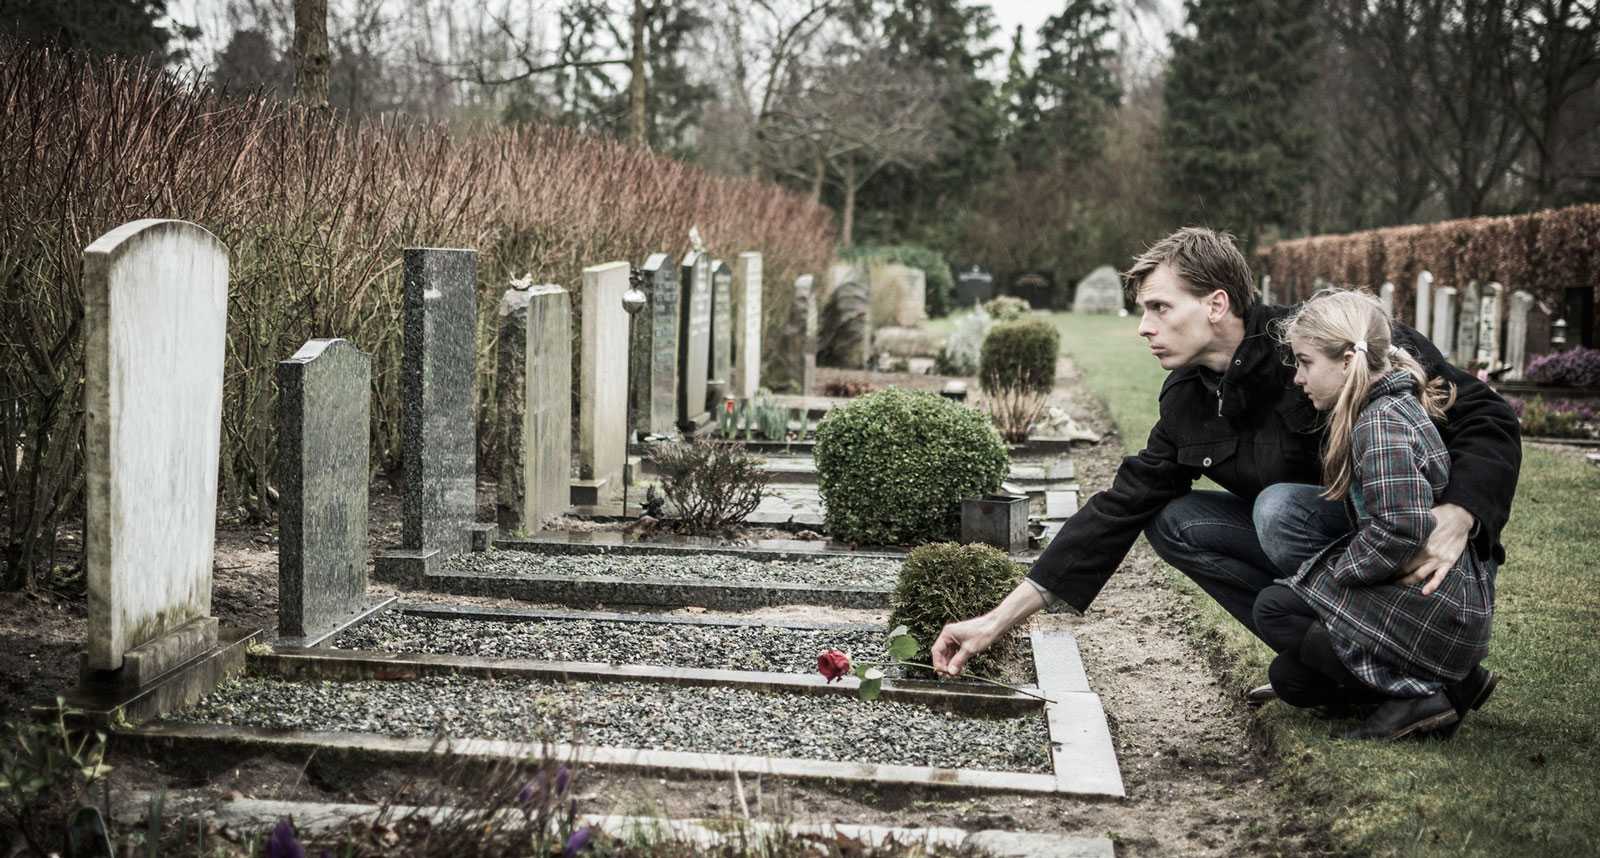 Можно на кладбище читать. Эджвербери Лэйн кладбище. Мужчина и женщина на кладбище. Фотосессия на кладбище.